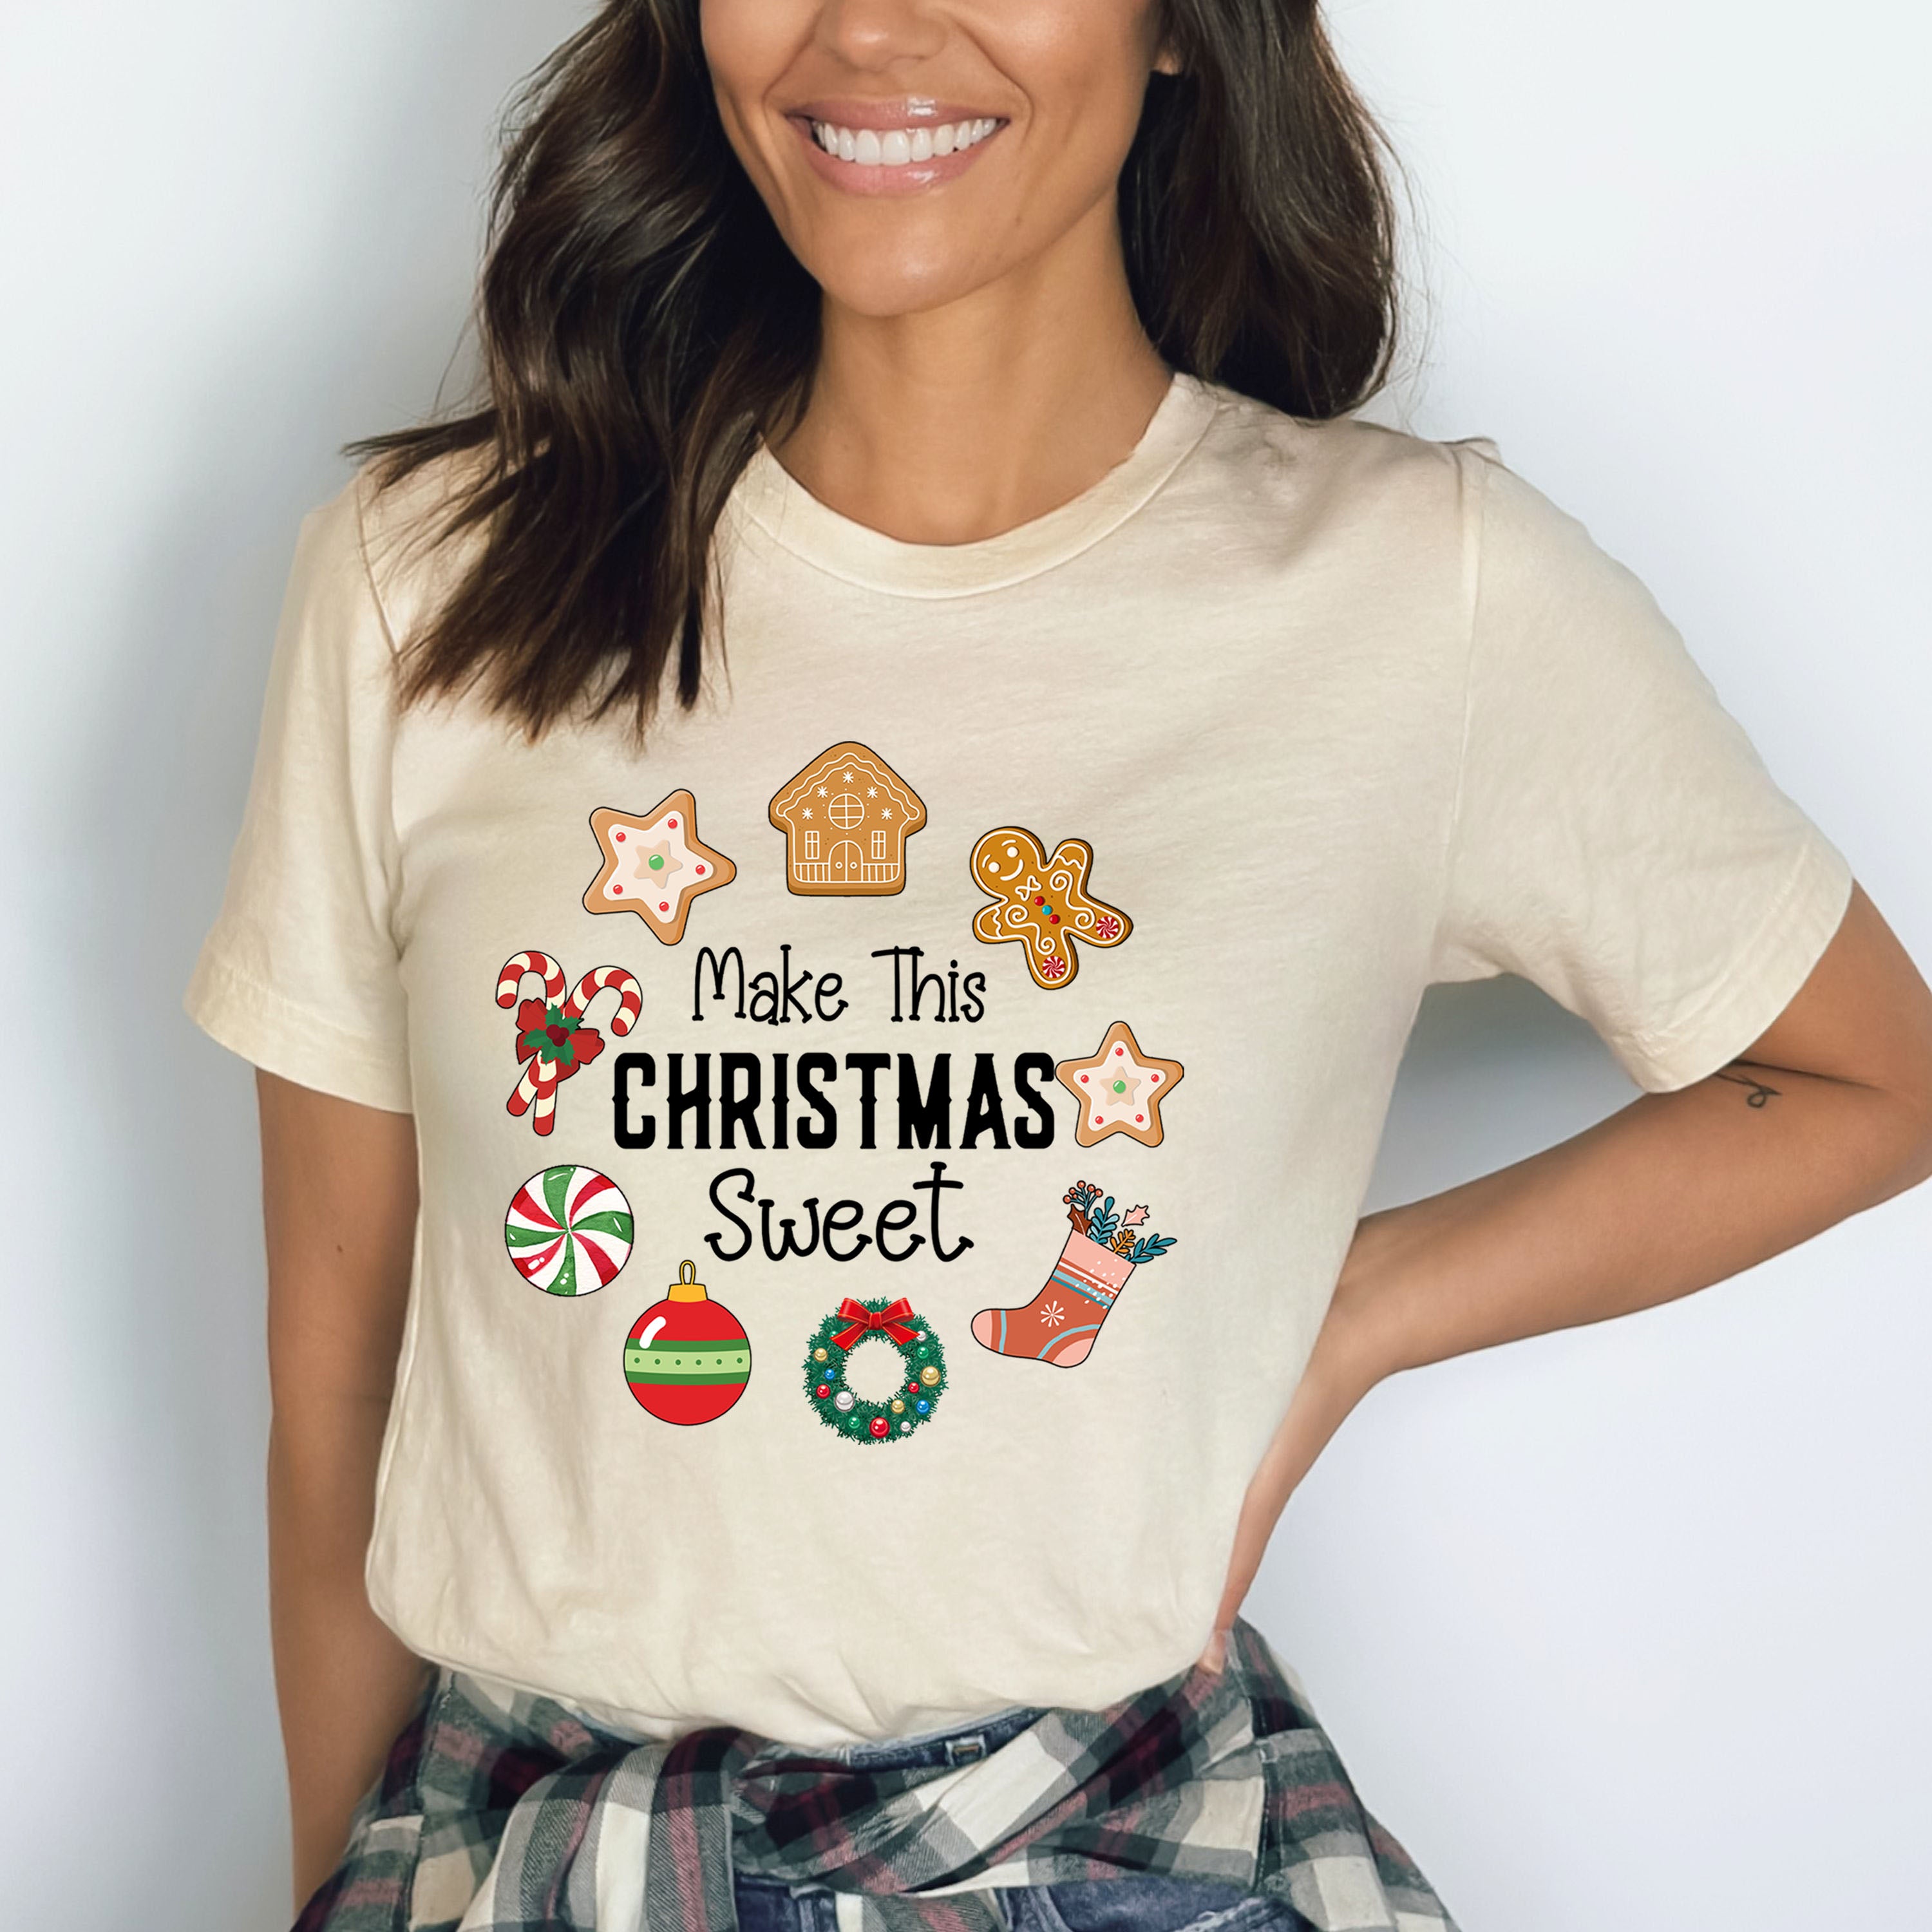 Make This Christmas Sweet - Bella Canvas